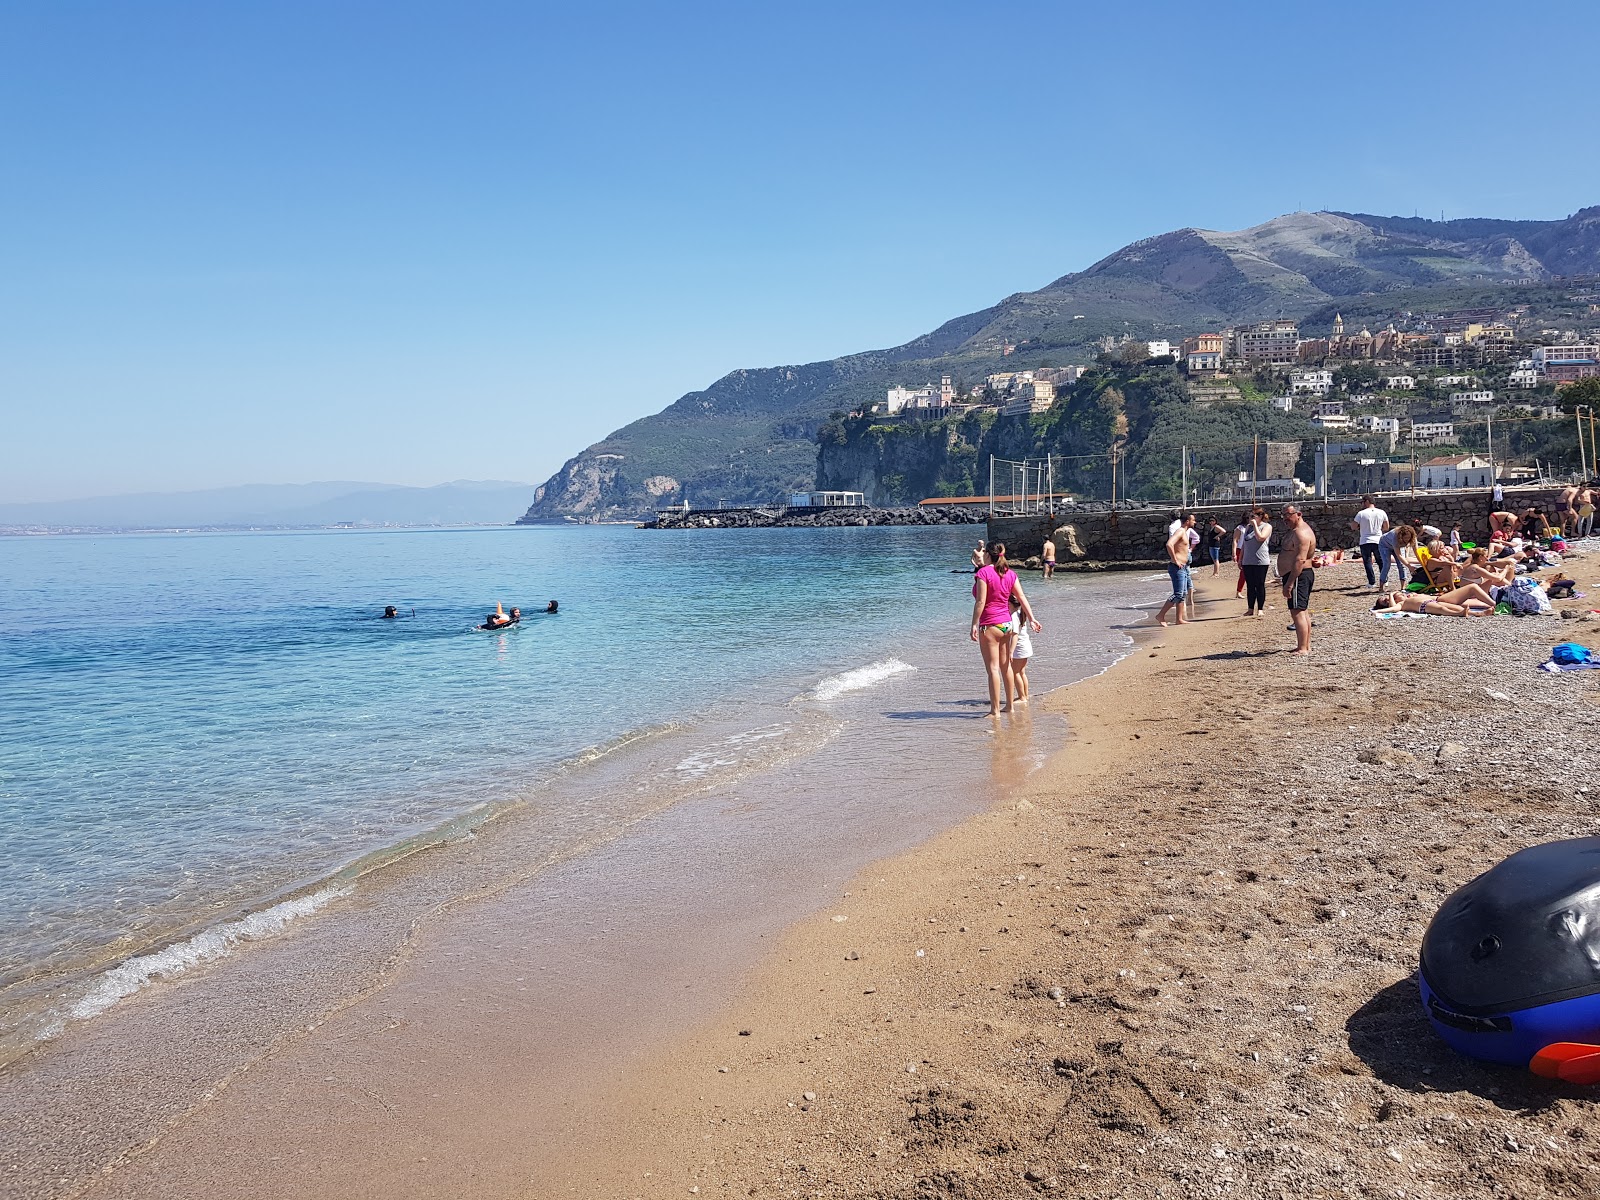 Spiaggia Seiano'in fotoğrafı küçük koylar ile birlikte